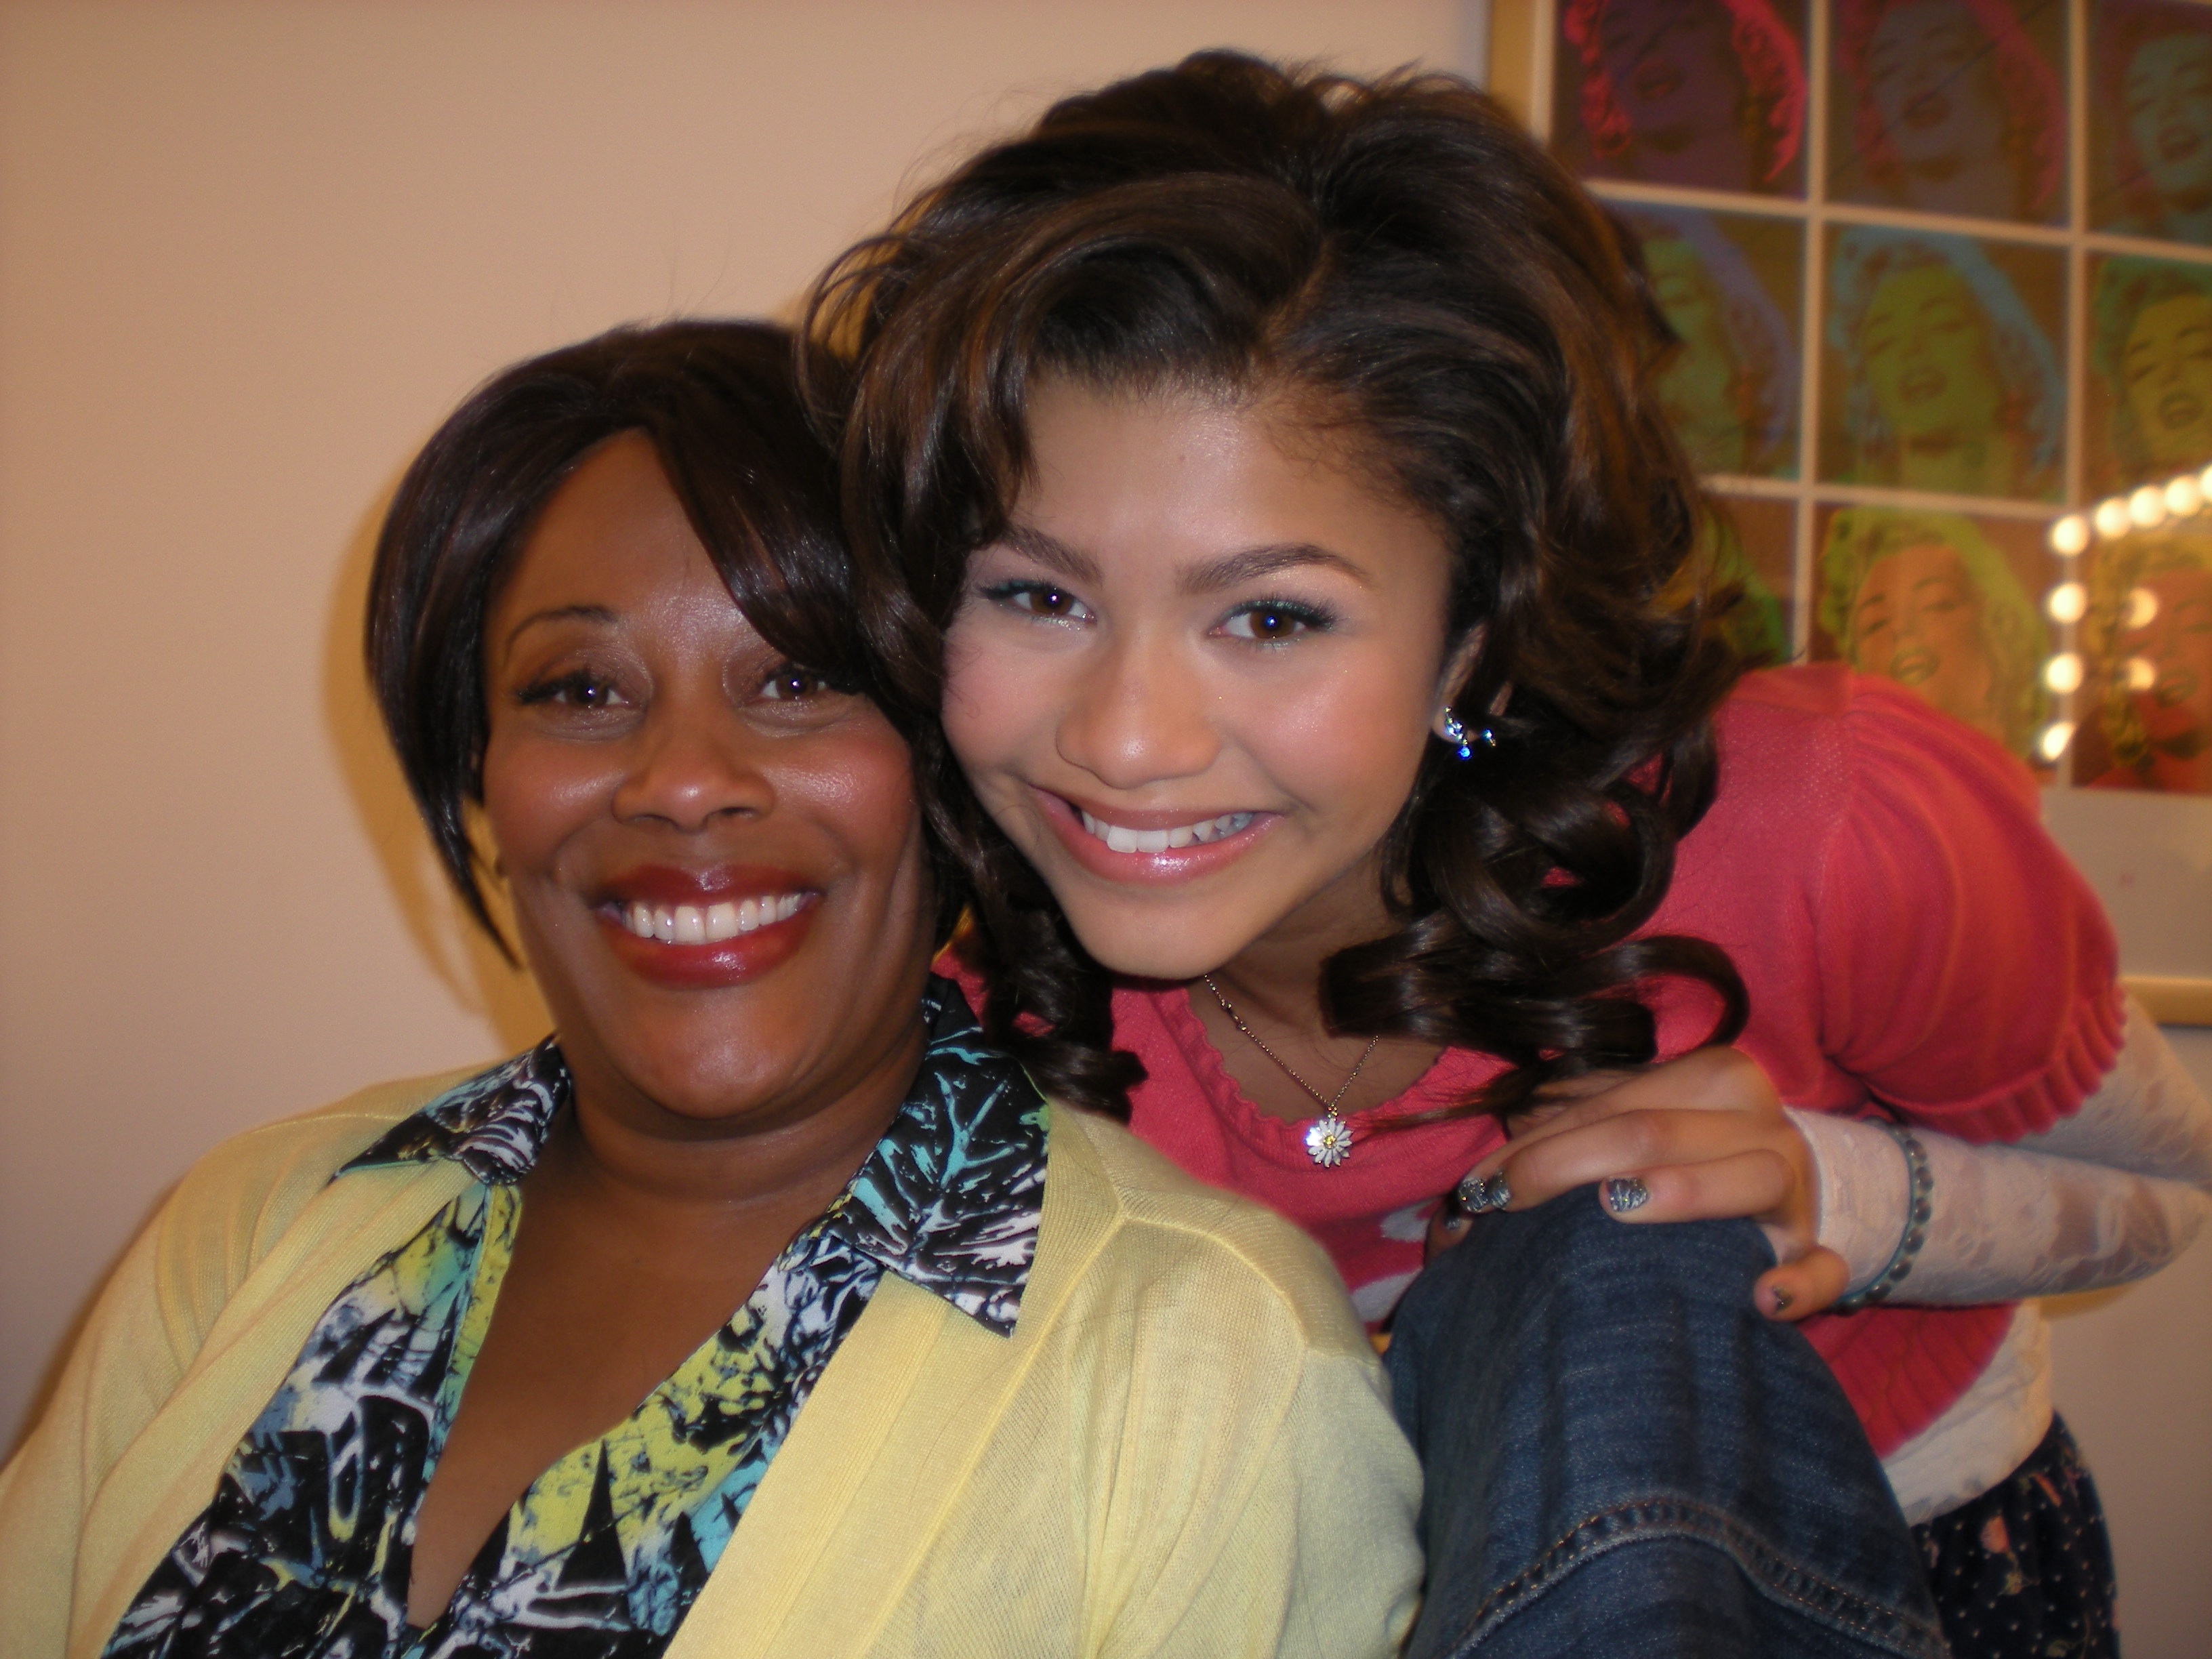 Stars of Disneys Shake It Up Zendaya Coleman & on camera mom